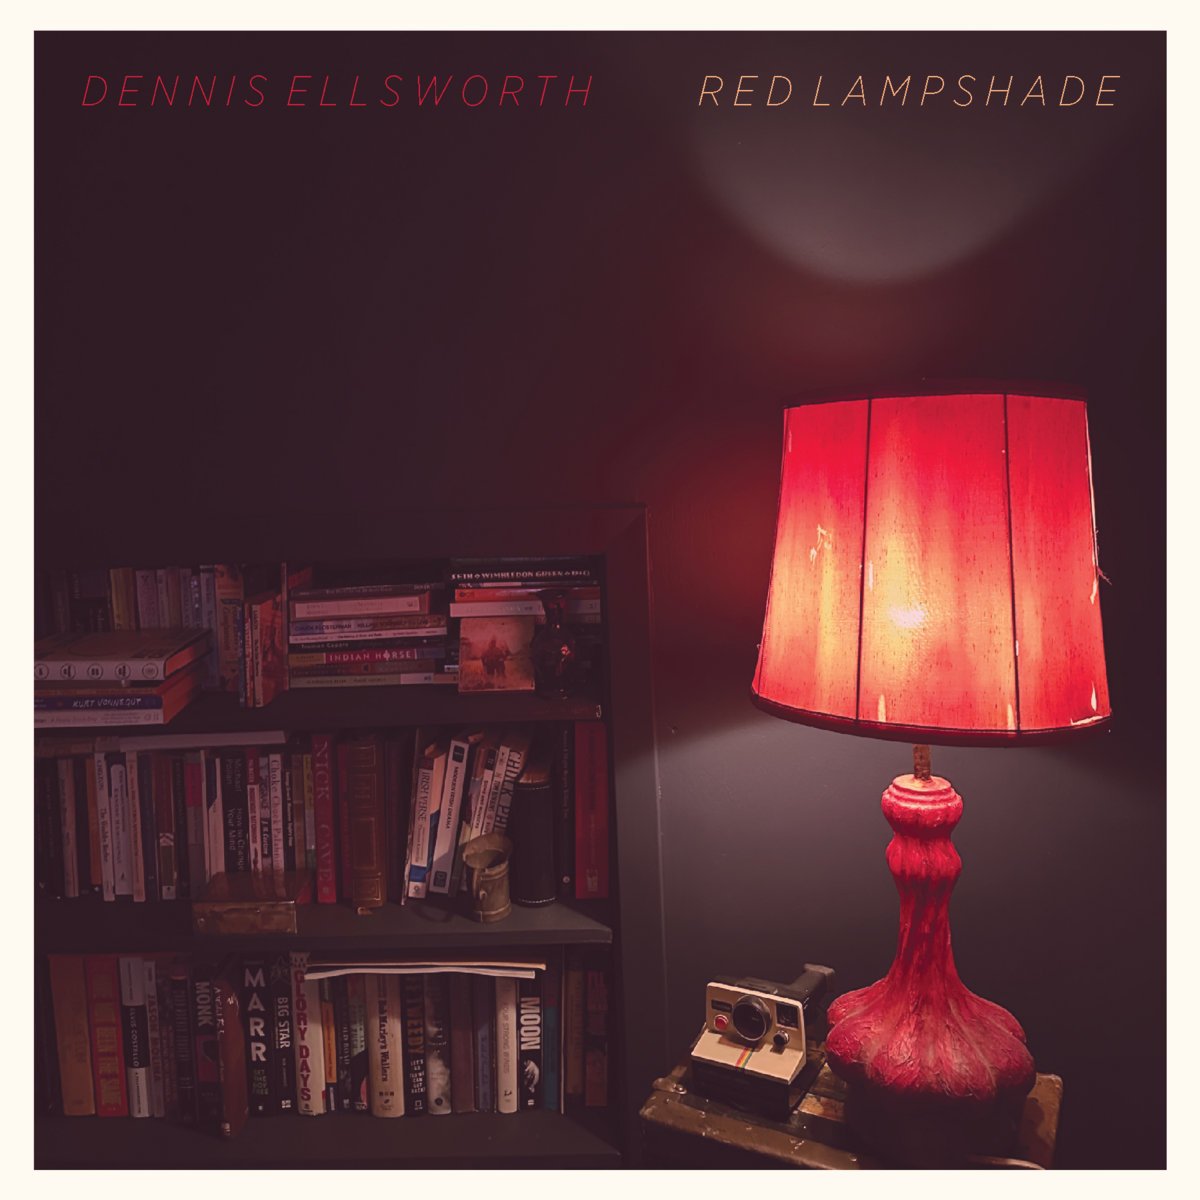 Dennis Ellsworth 'Red Lampshade'